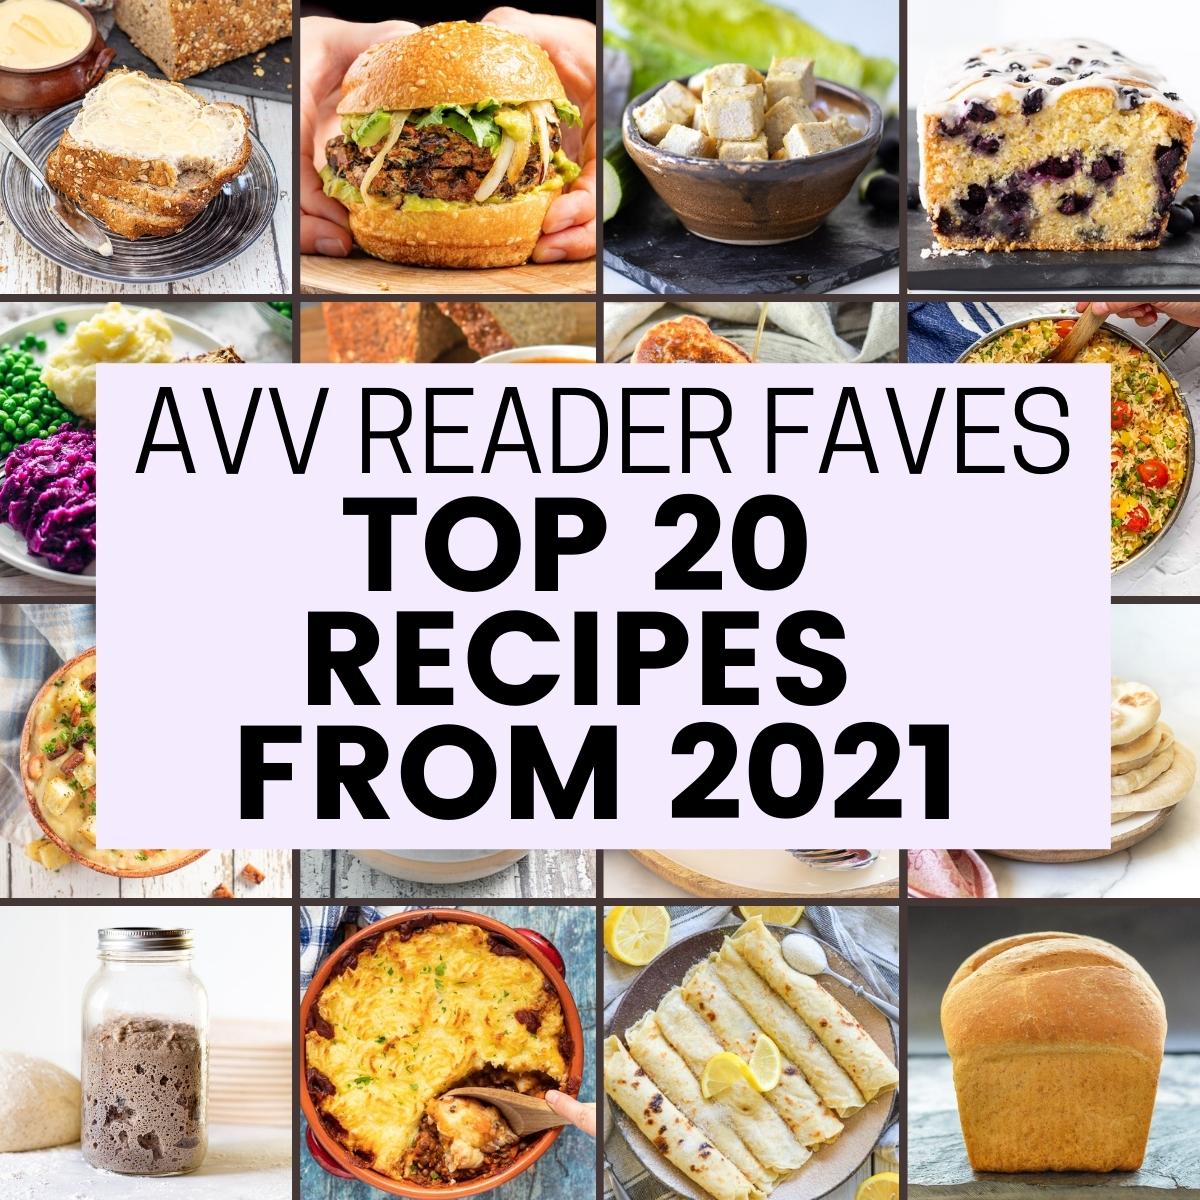 AVV Reader's Favourite Recipes of 2021